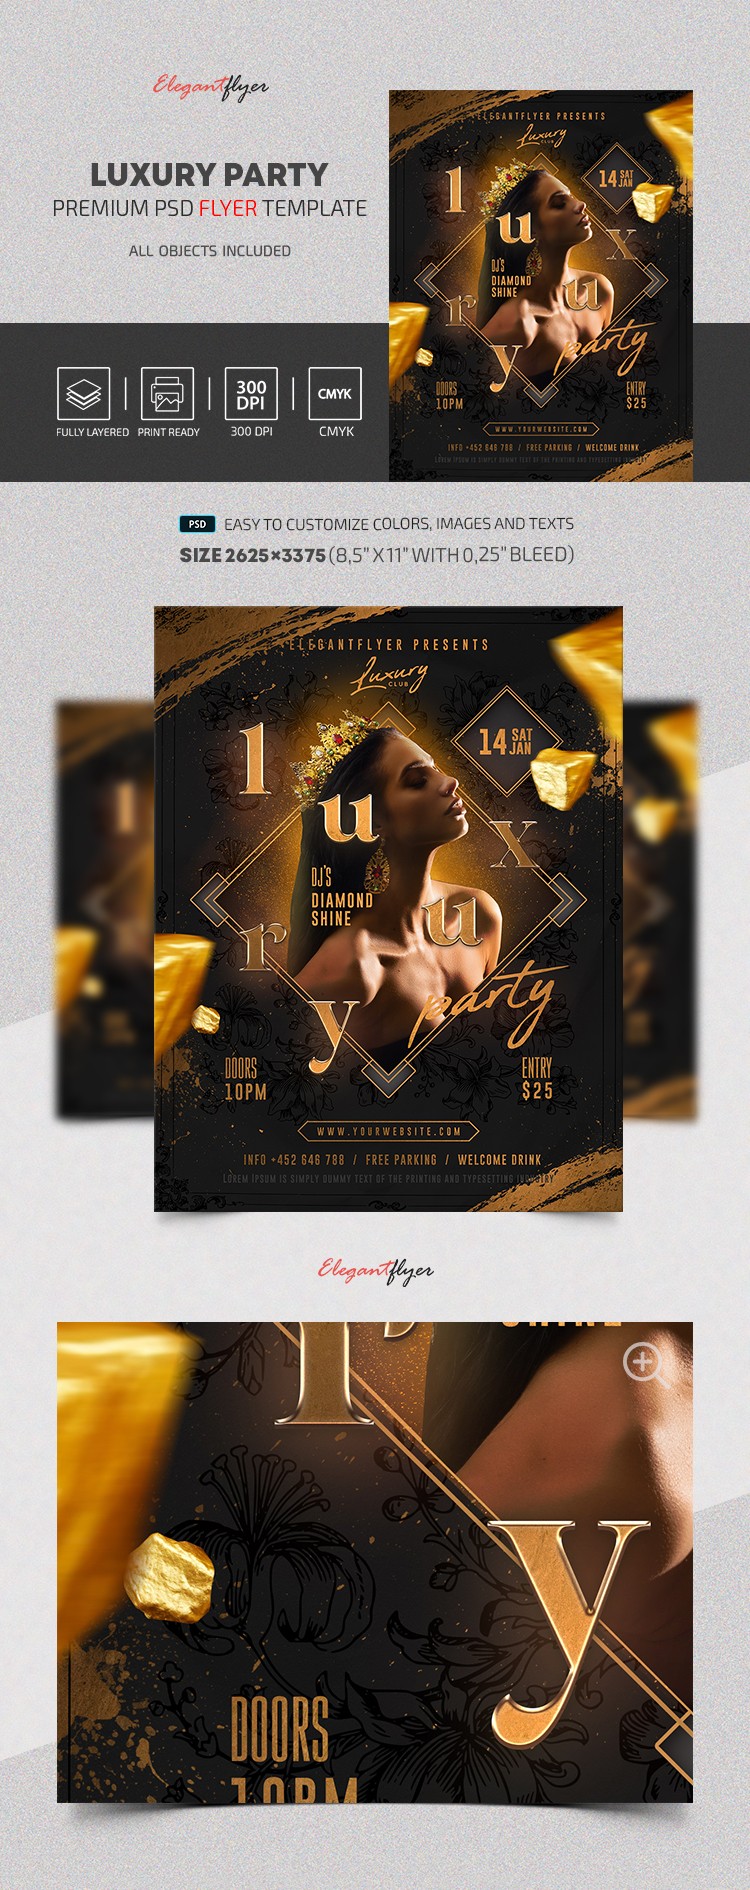 Luxury Party Flyer by ElegantFlyer